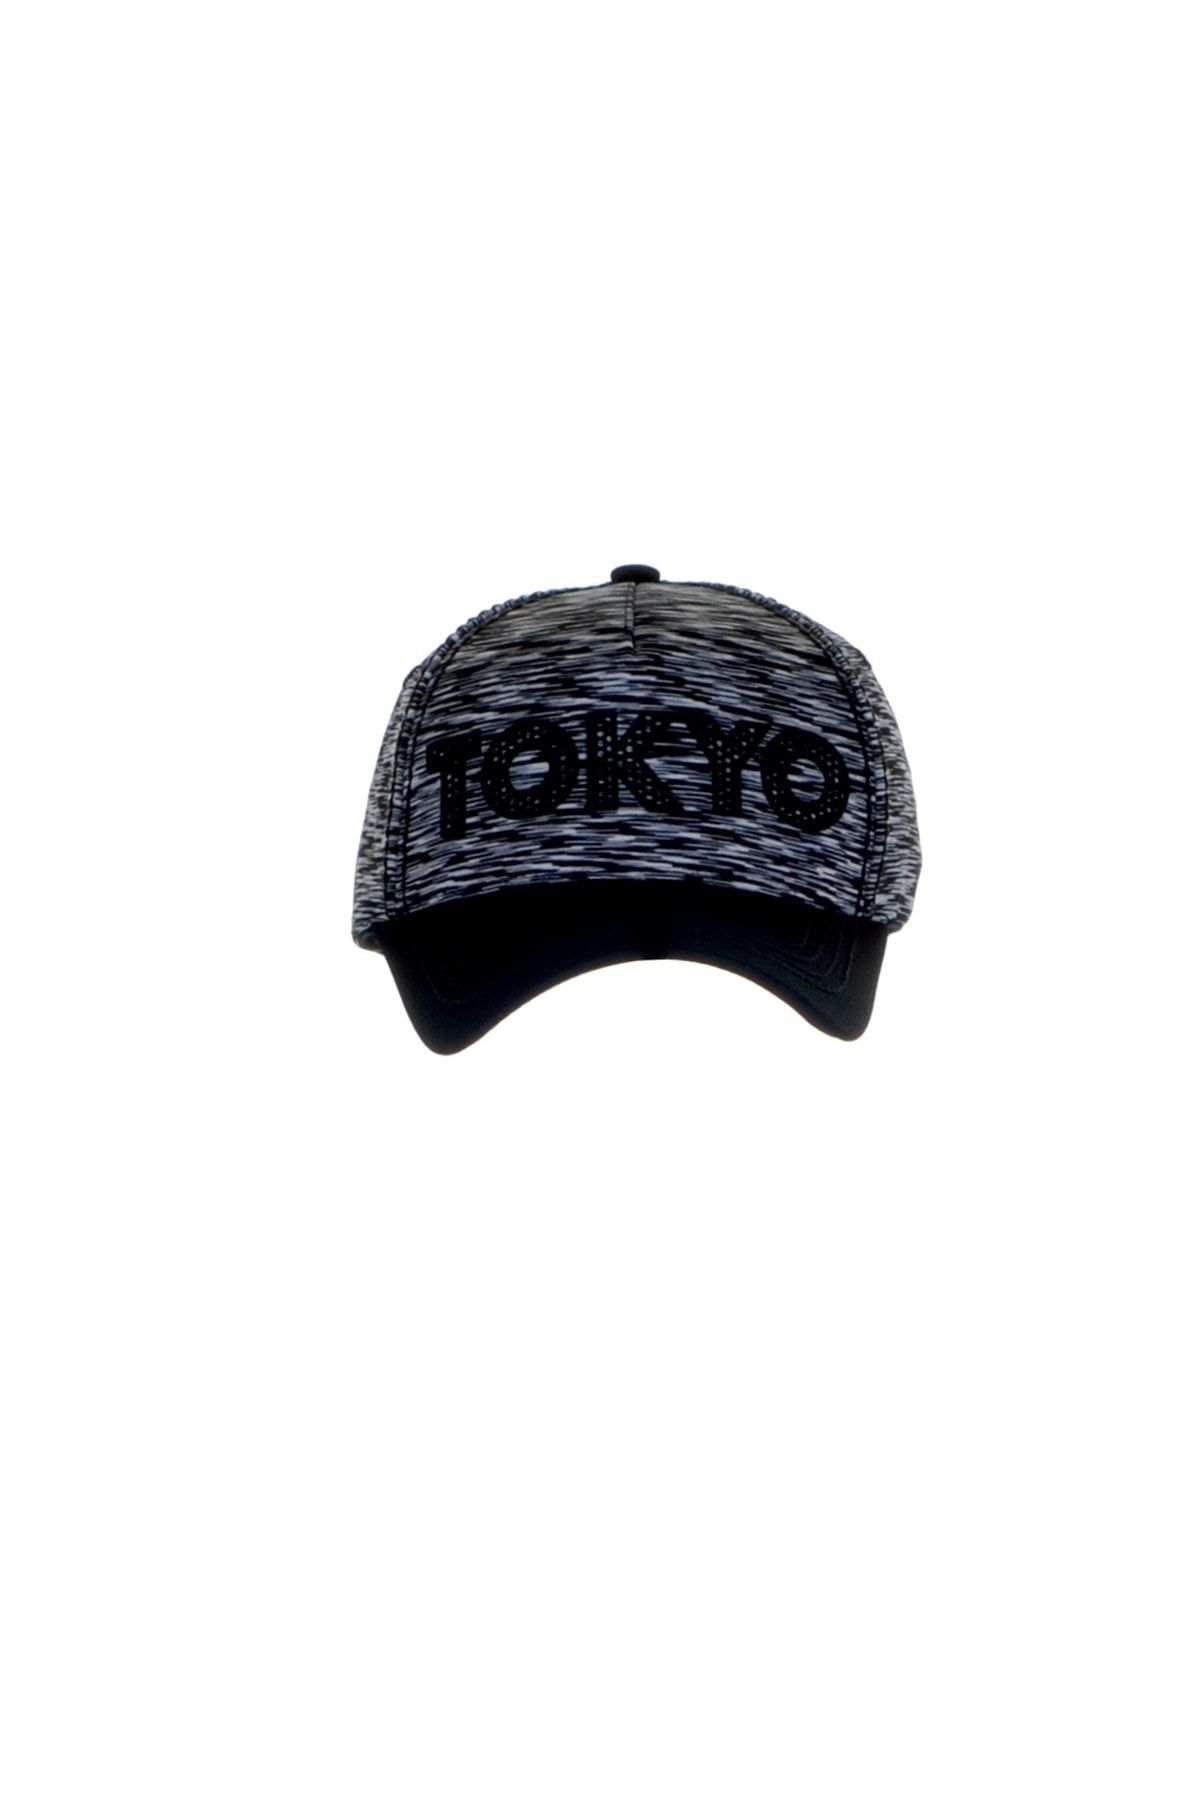 Fonem Tokyo Beyzbol Şapka Fo Cap 014 Siyah